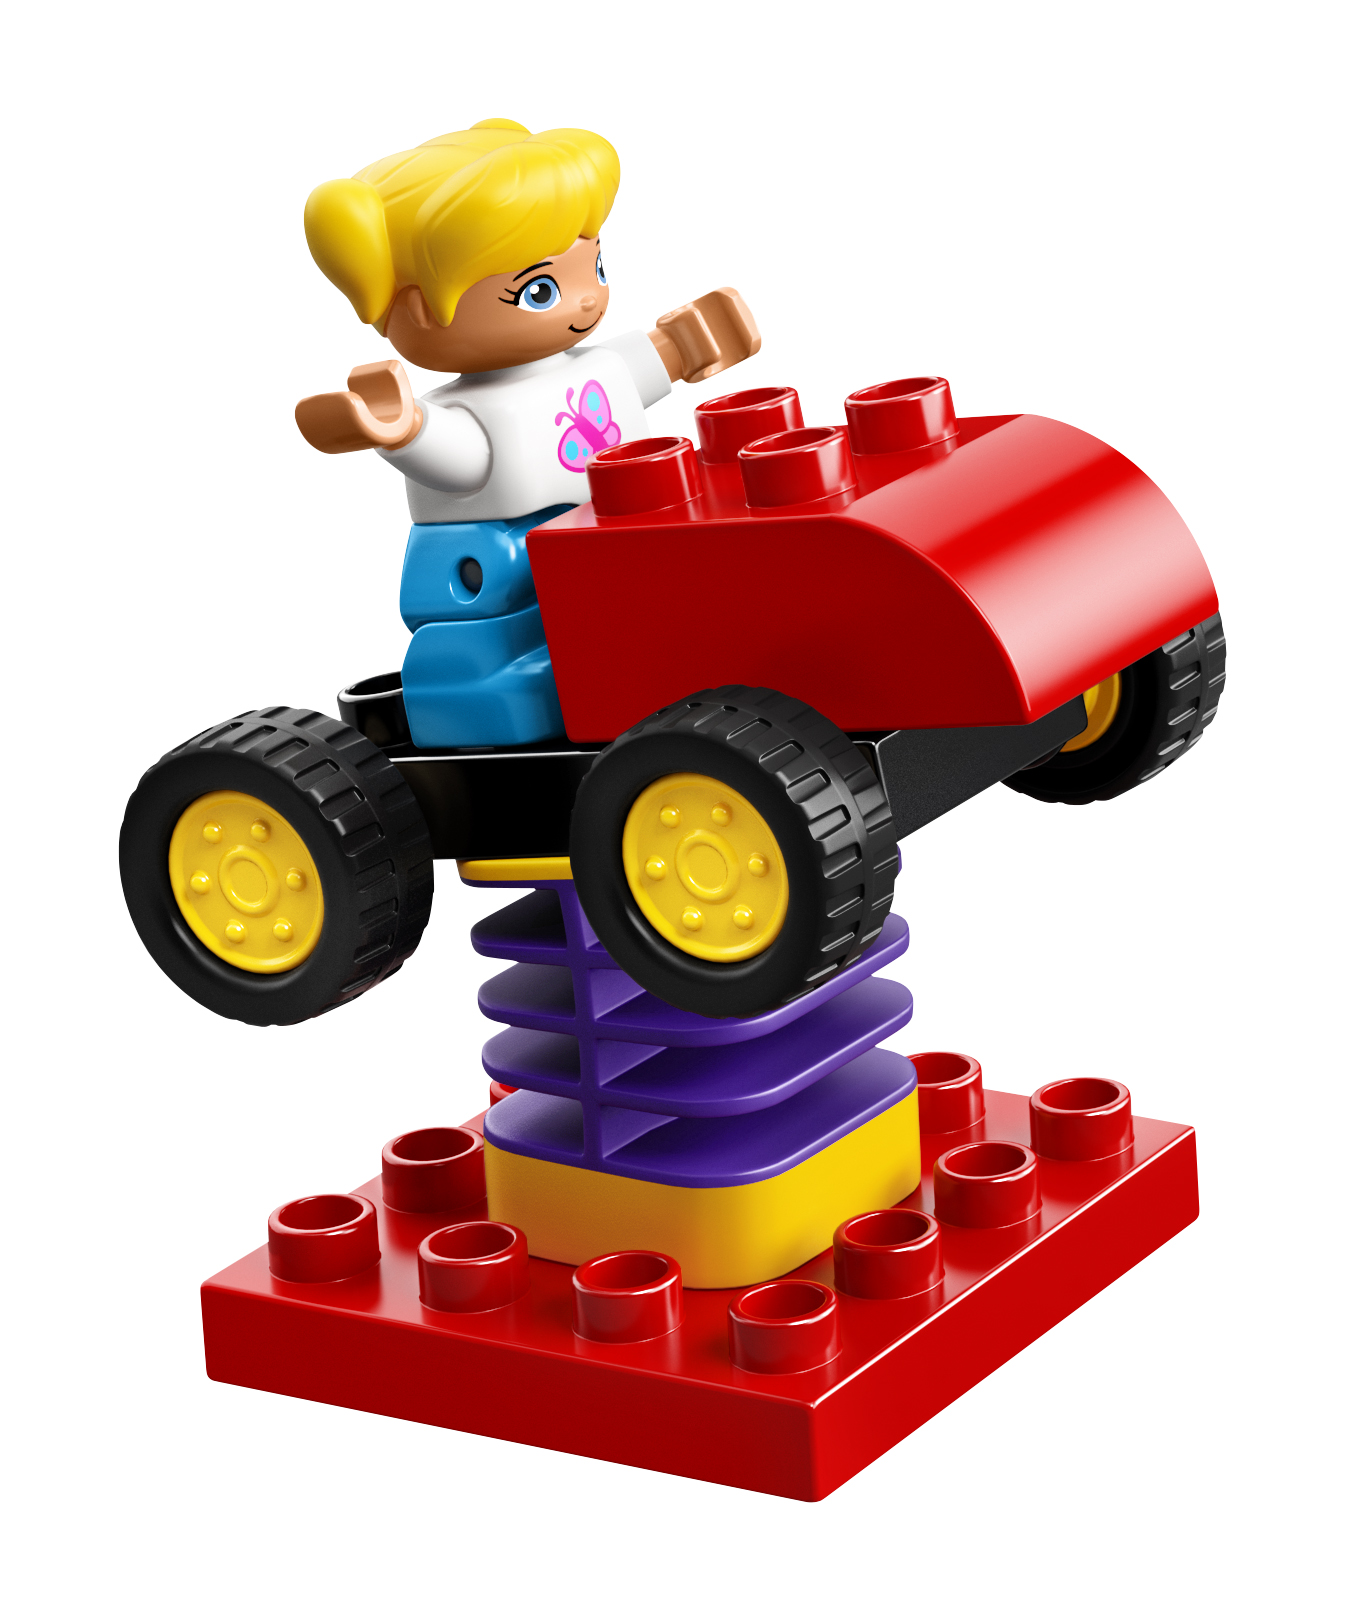 LEGO DUPLO My First Large Playground Brick Box 10864 - image 3 of 5